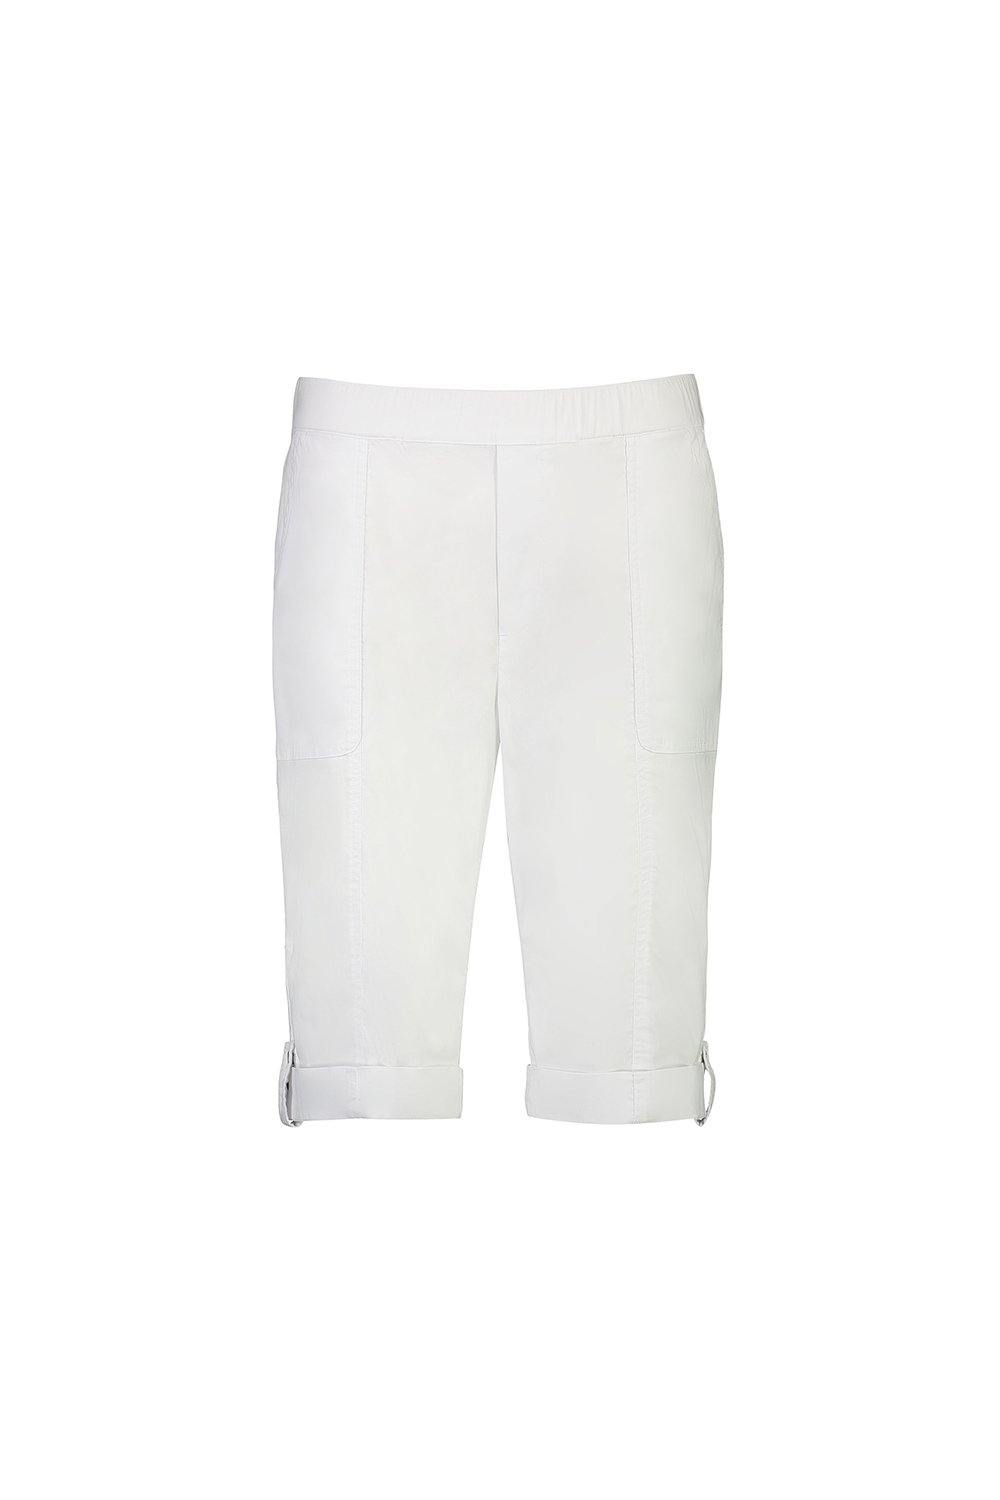 Acrobat Rolled Short - White - Pant VERGE